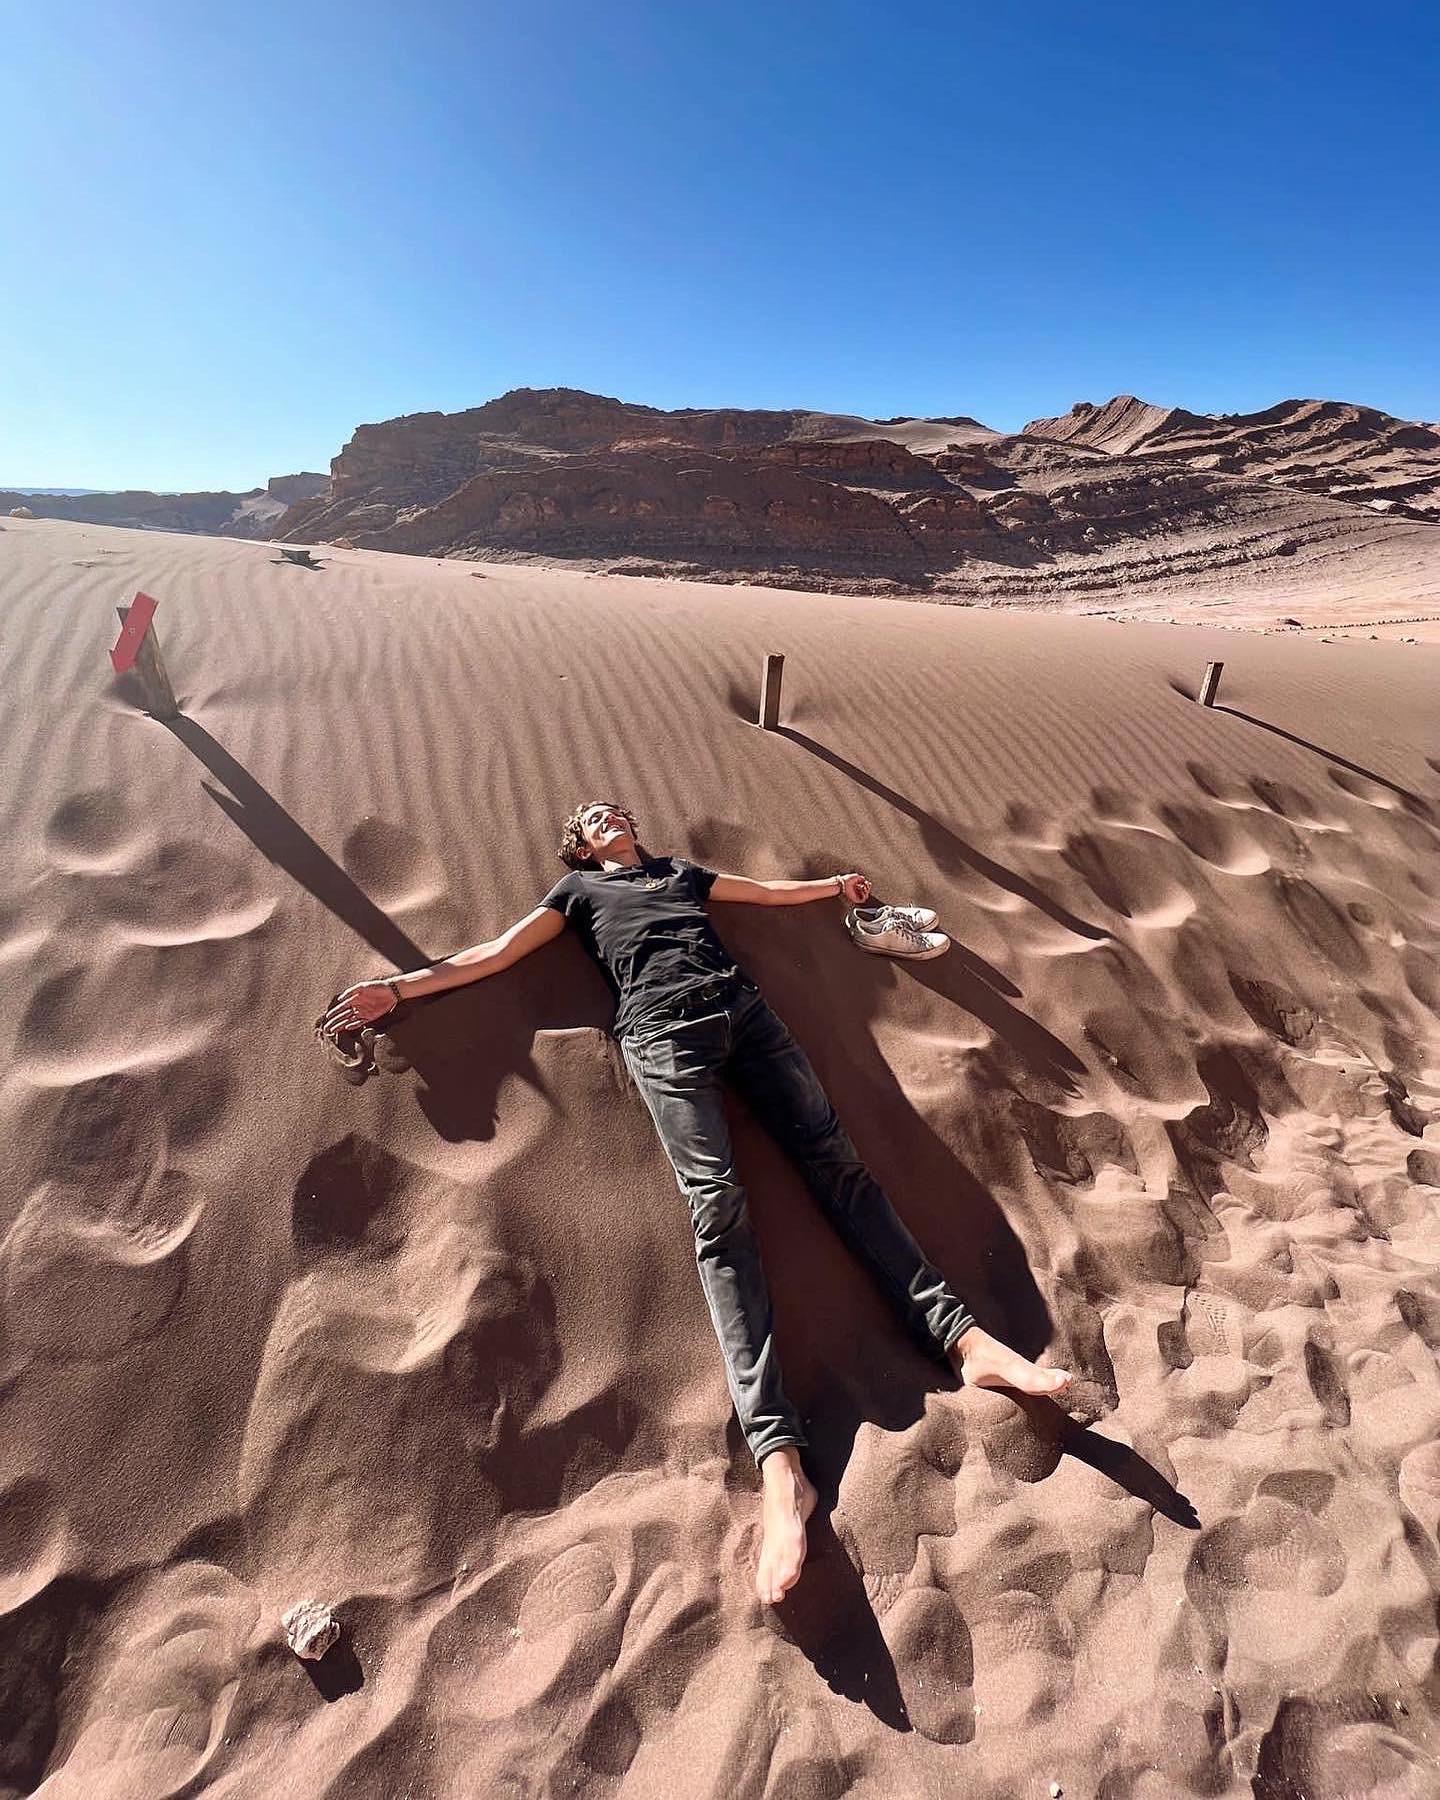 Ian at the desert